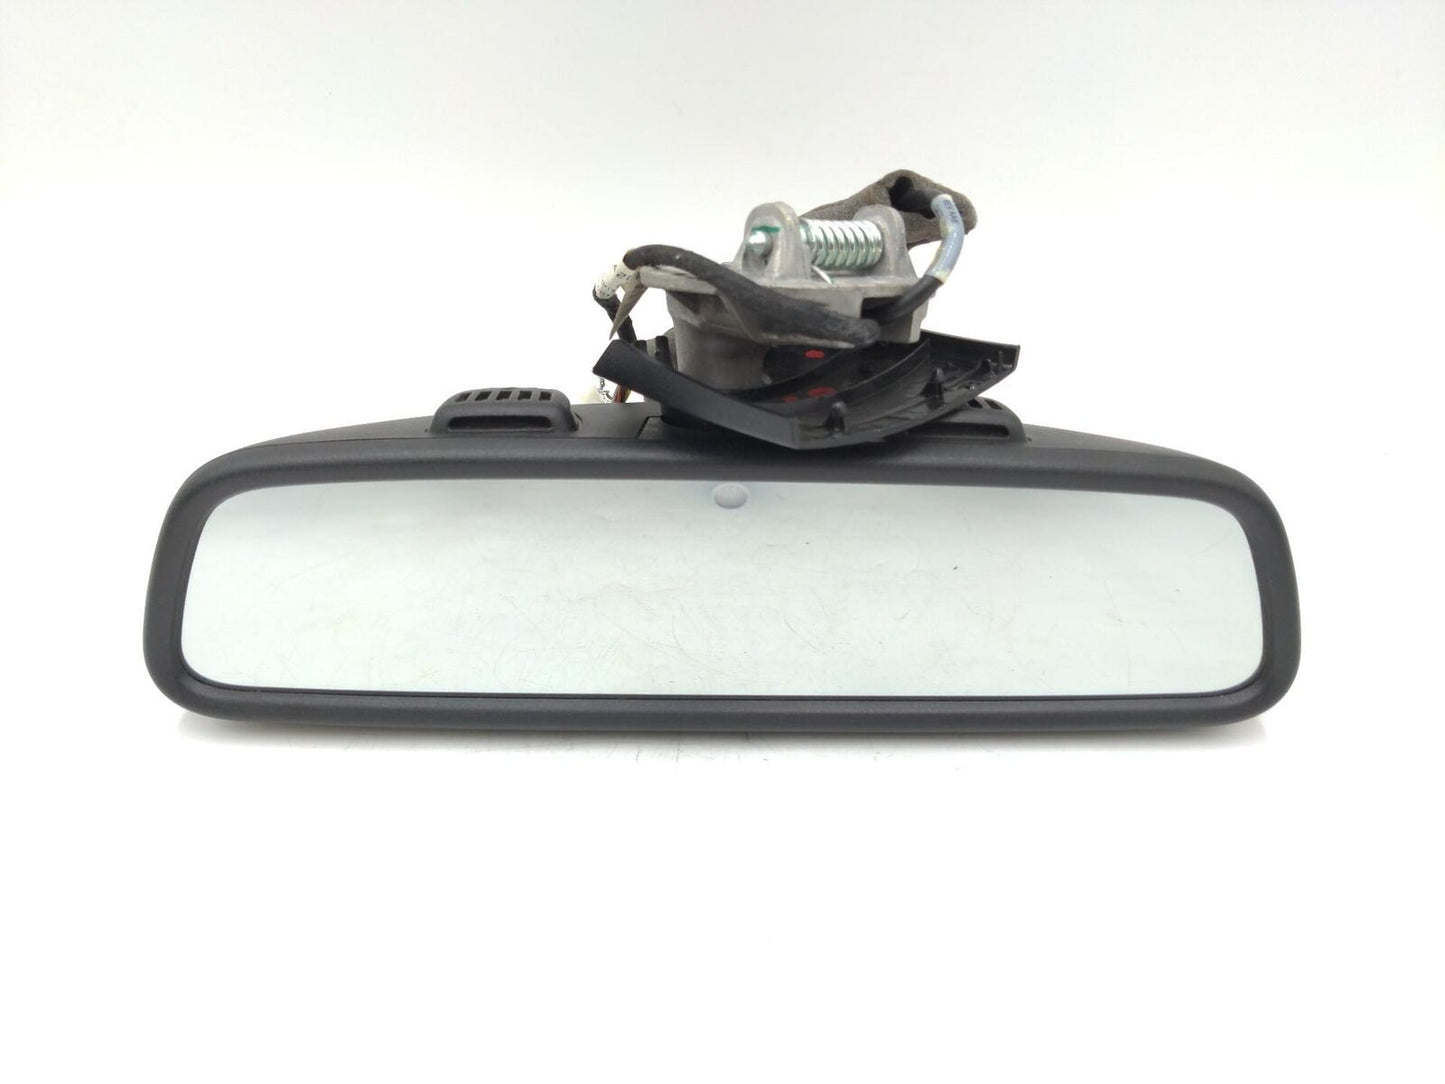 💥12 MERCEDES E350 Rear View Mirror Black Garage Door Opener E11026530💥